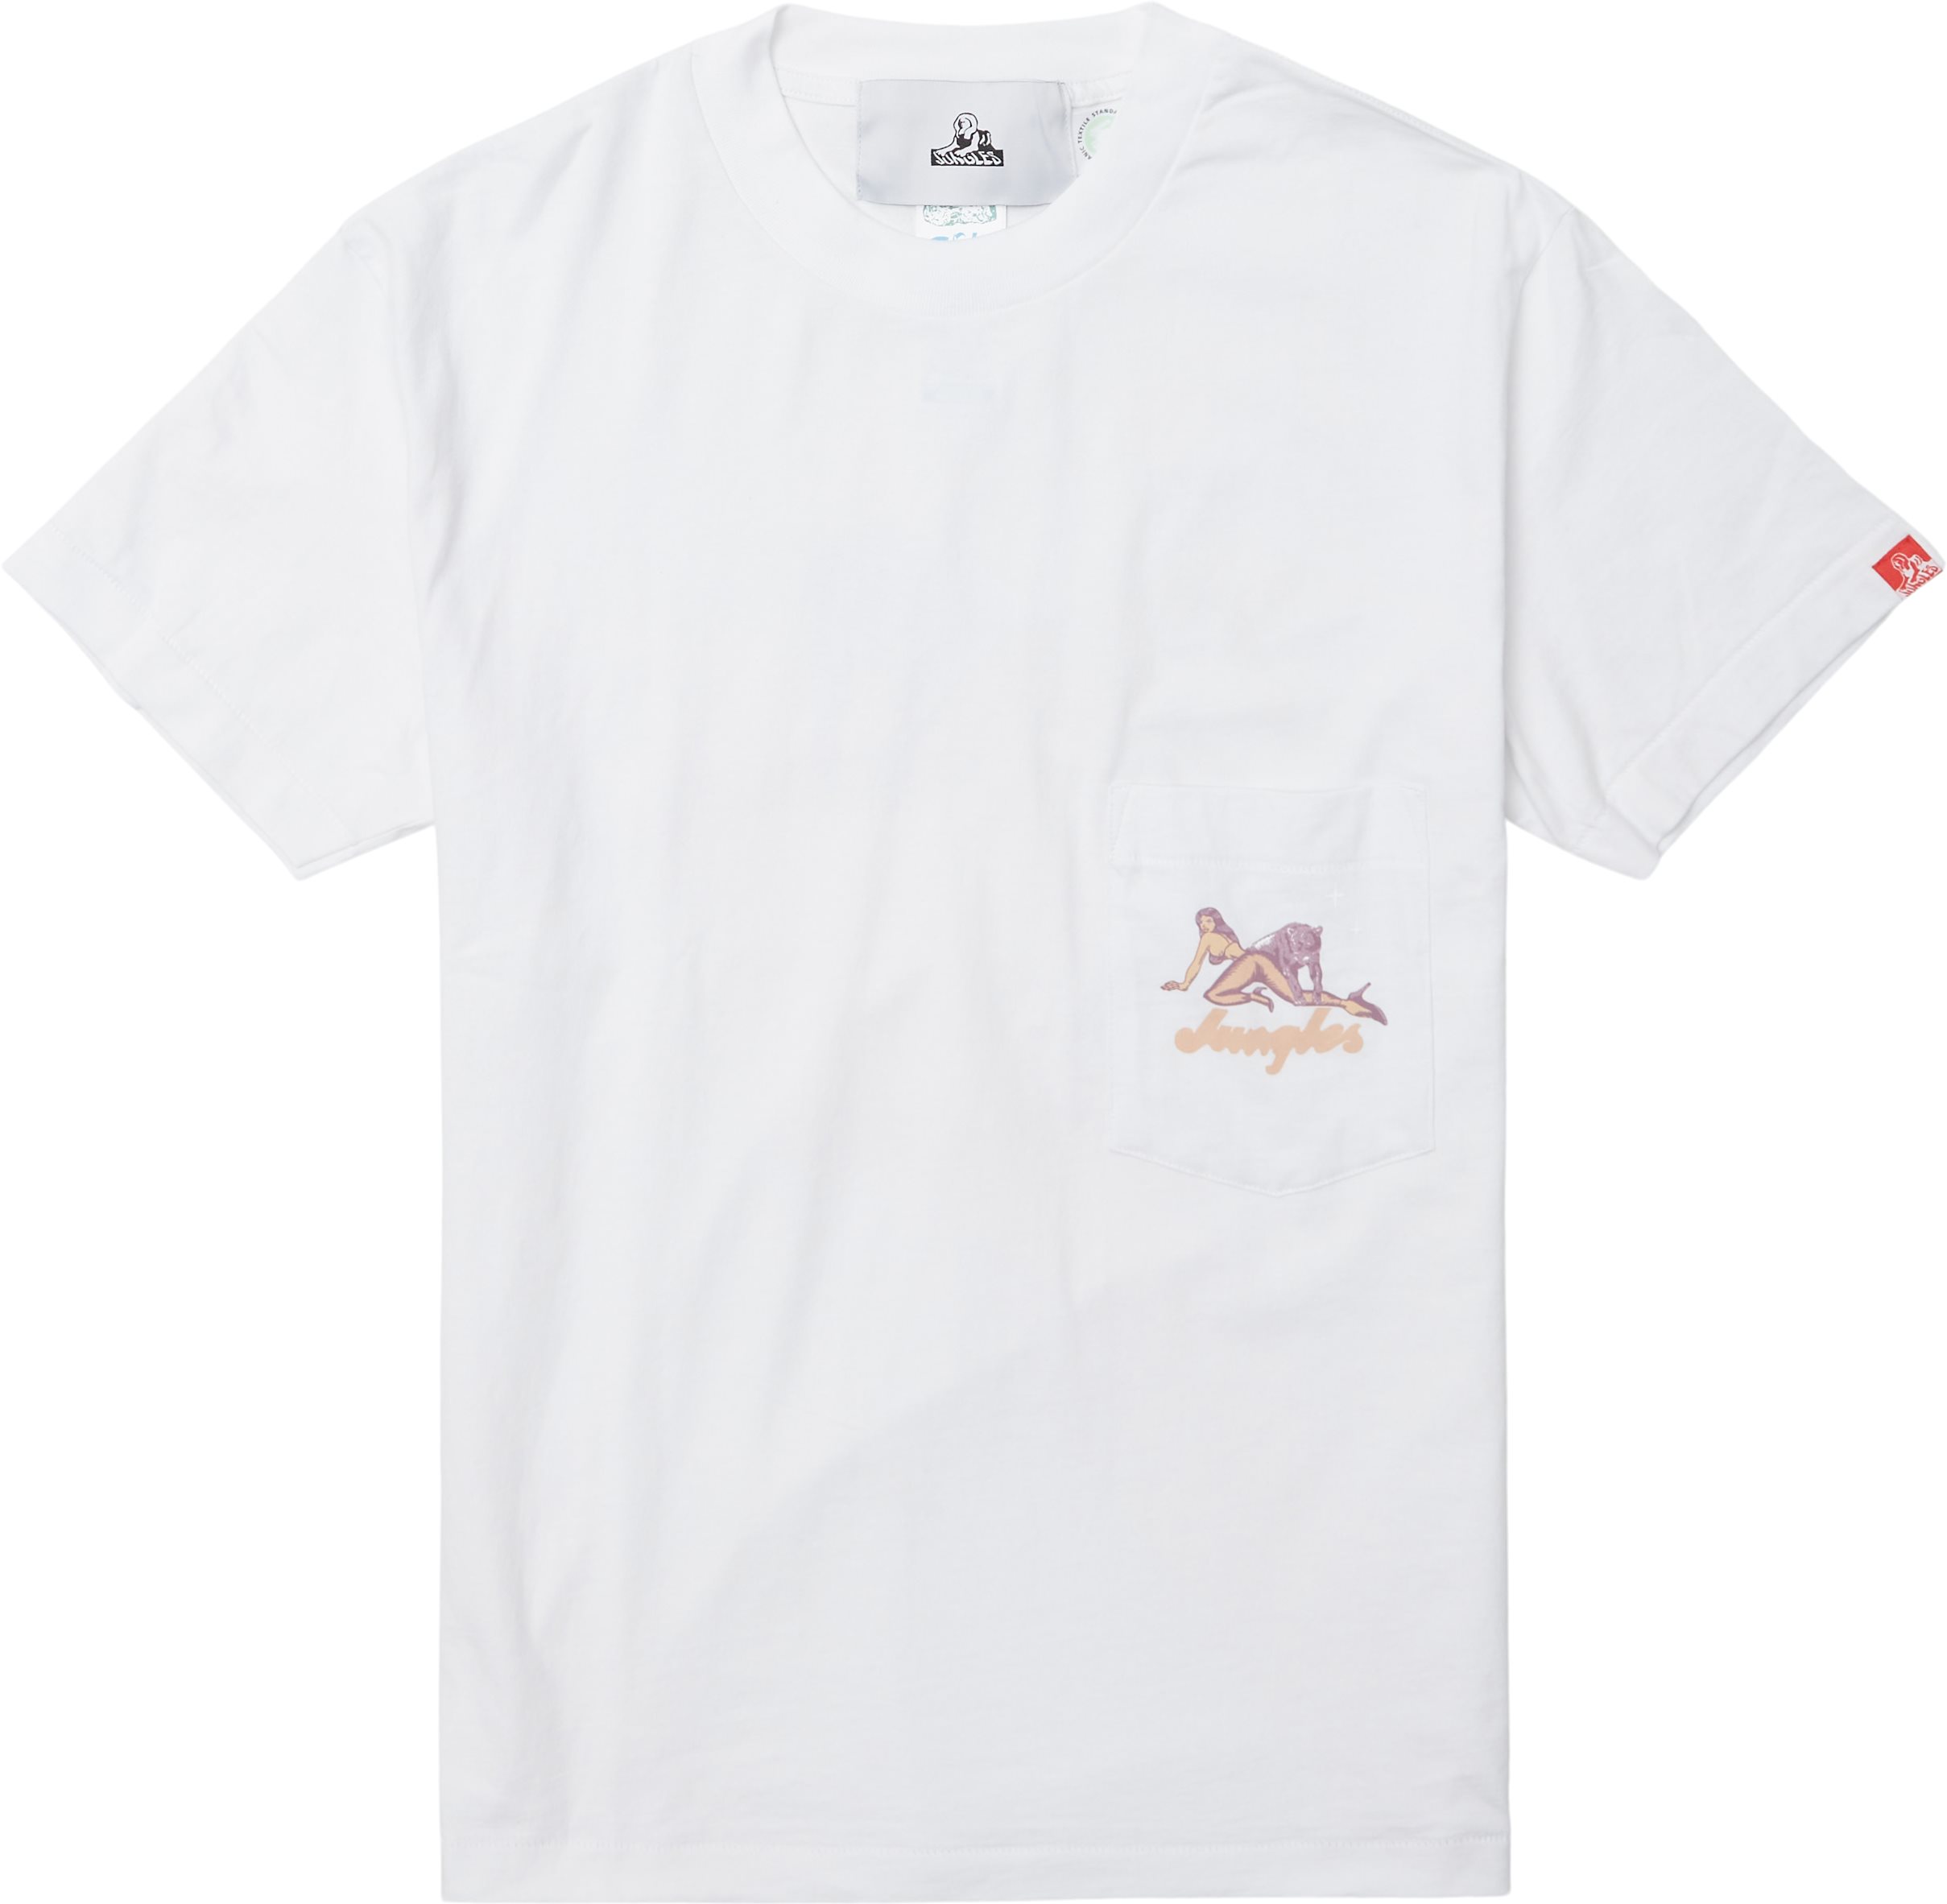 Clover Tee - T-shirts - Regular fit - White